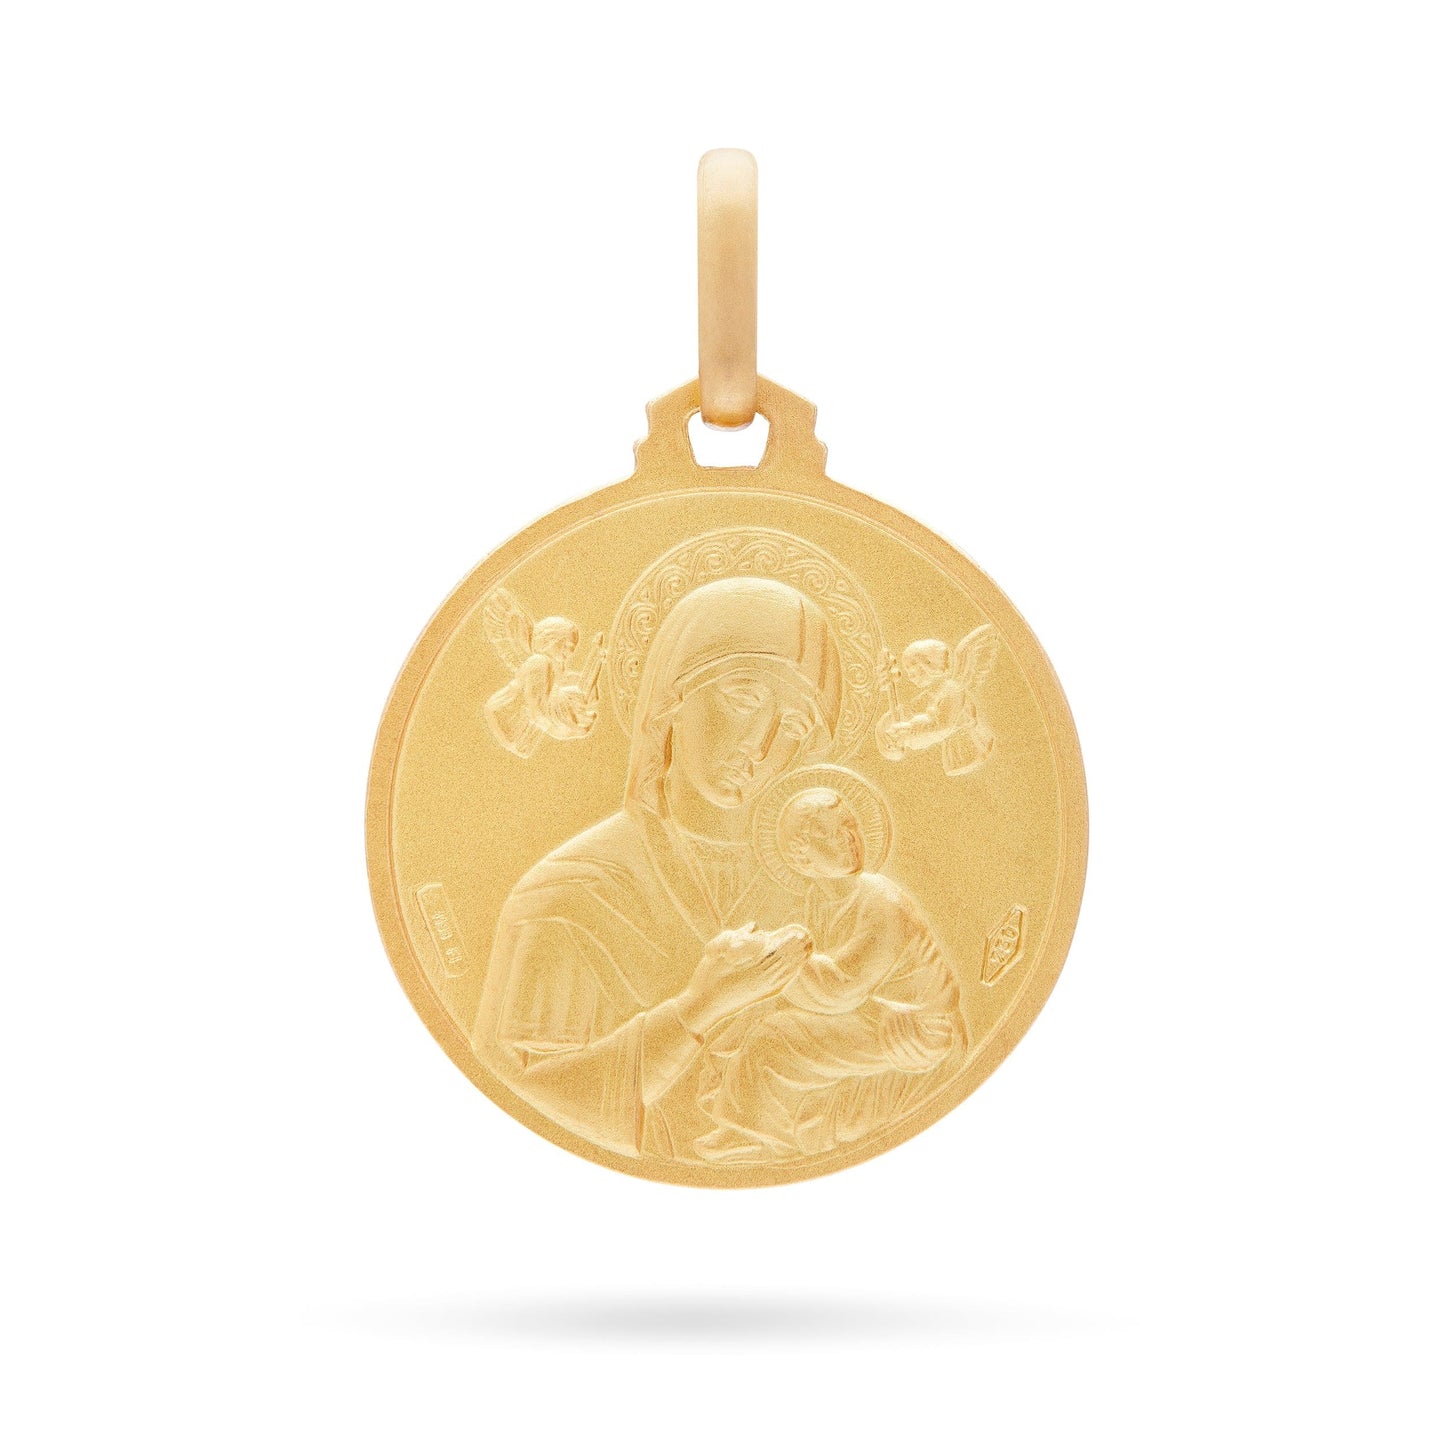 MONDO CATTOLICO Jewelry Double Sided Saint John Paul II Gold Medal